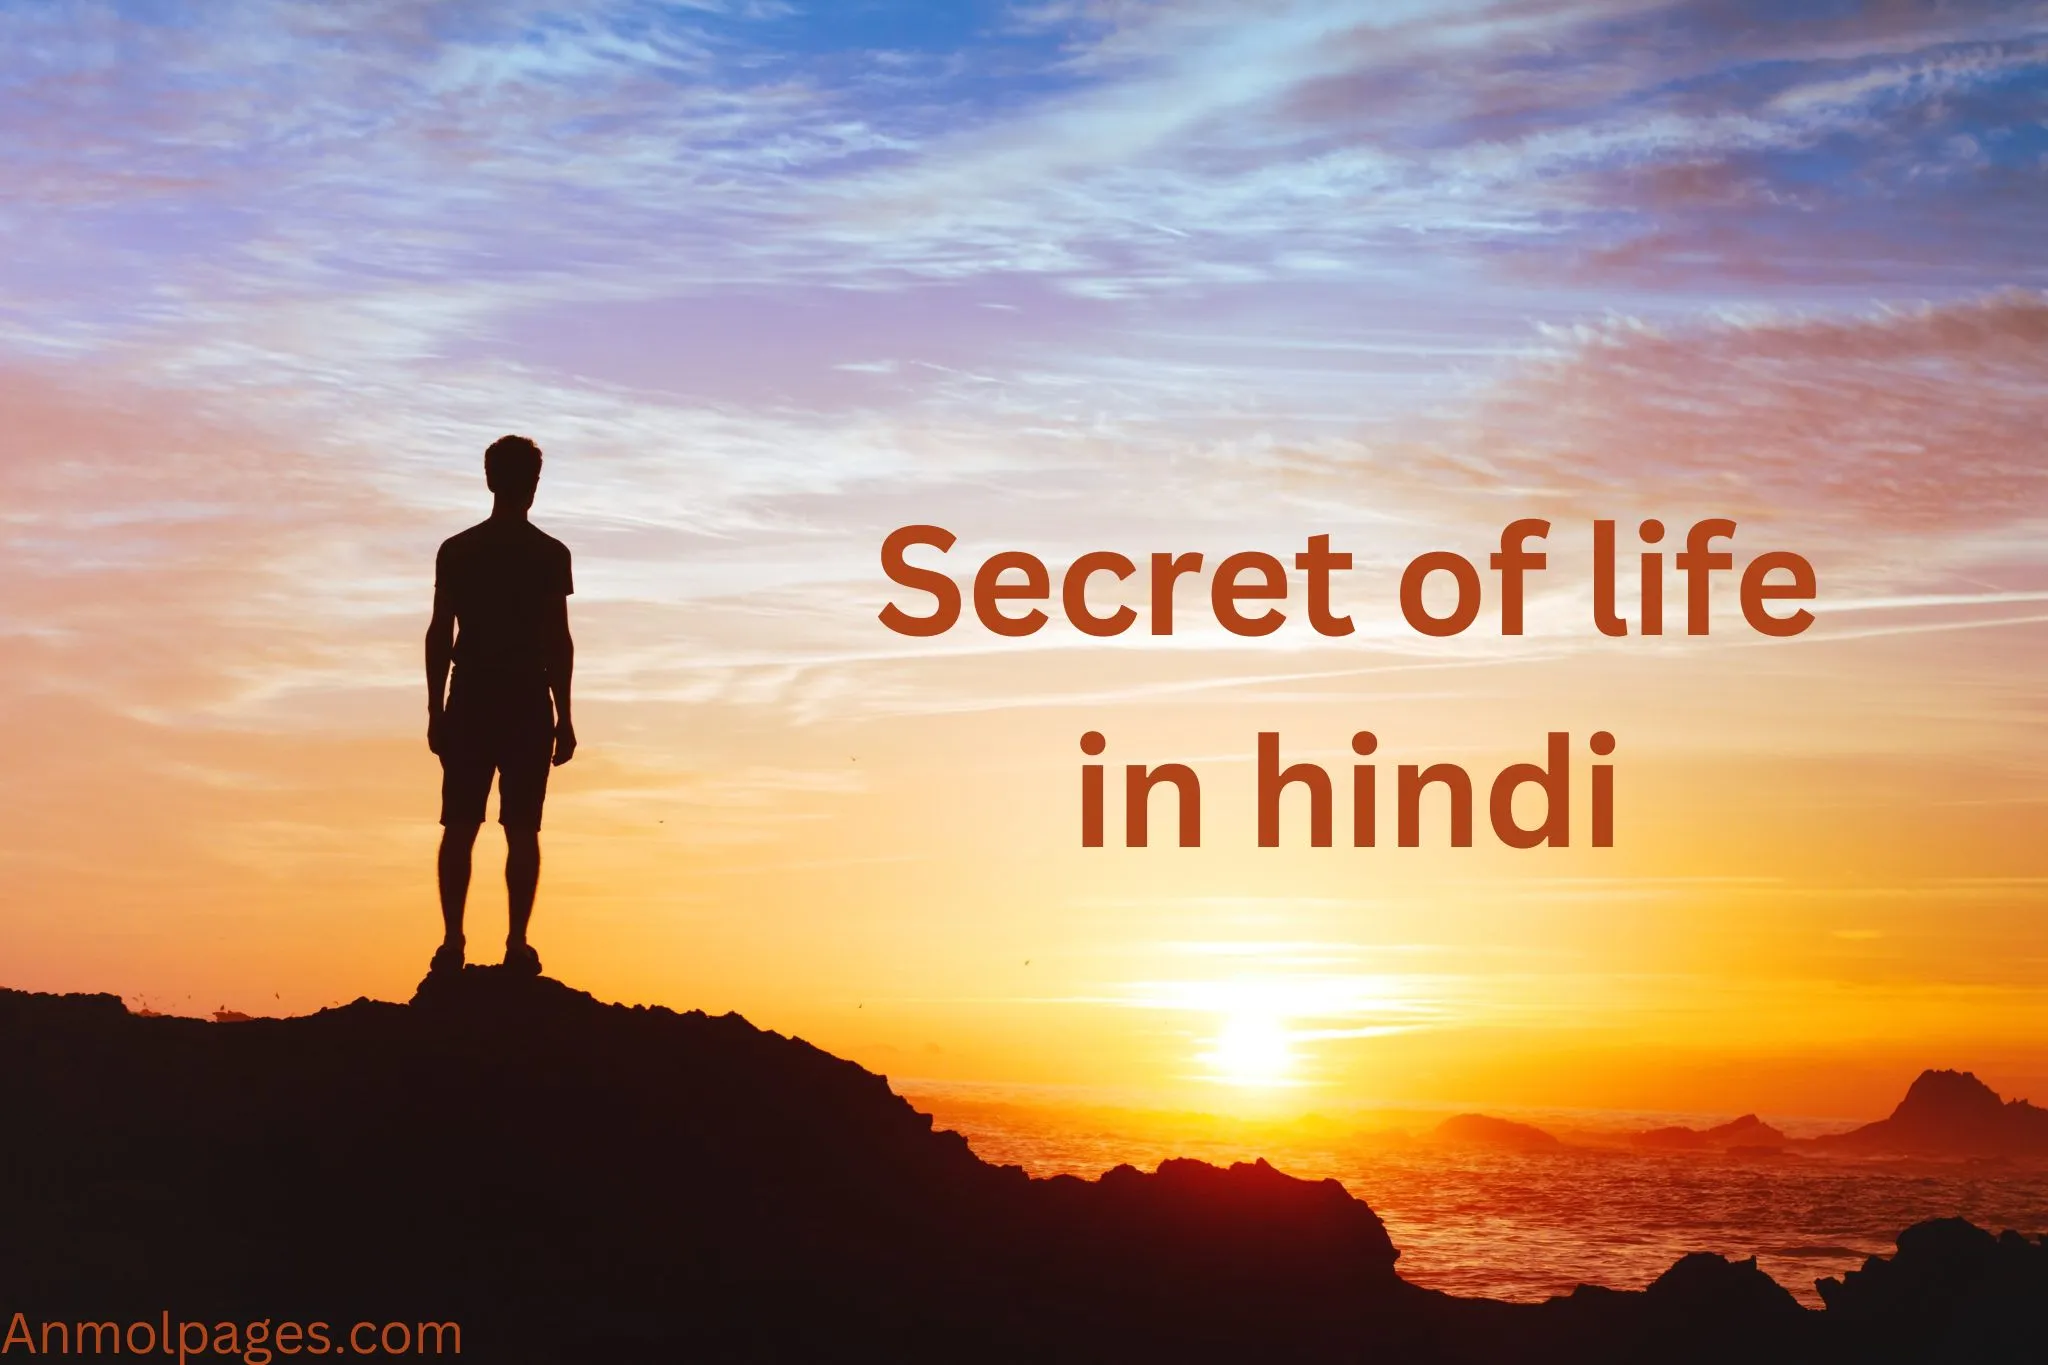 Secret of life in hindi